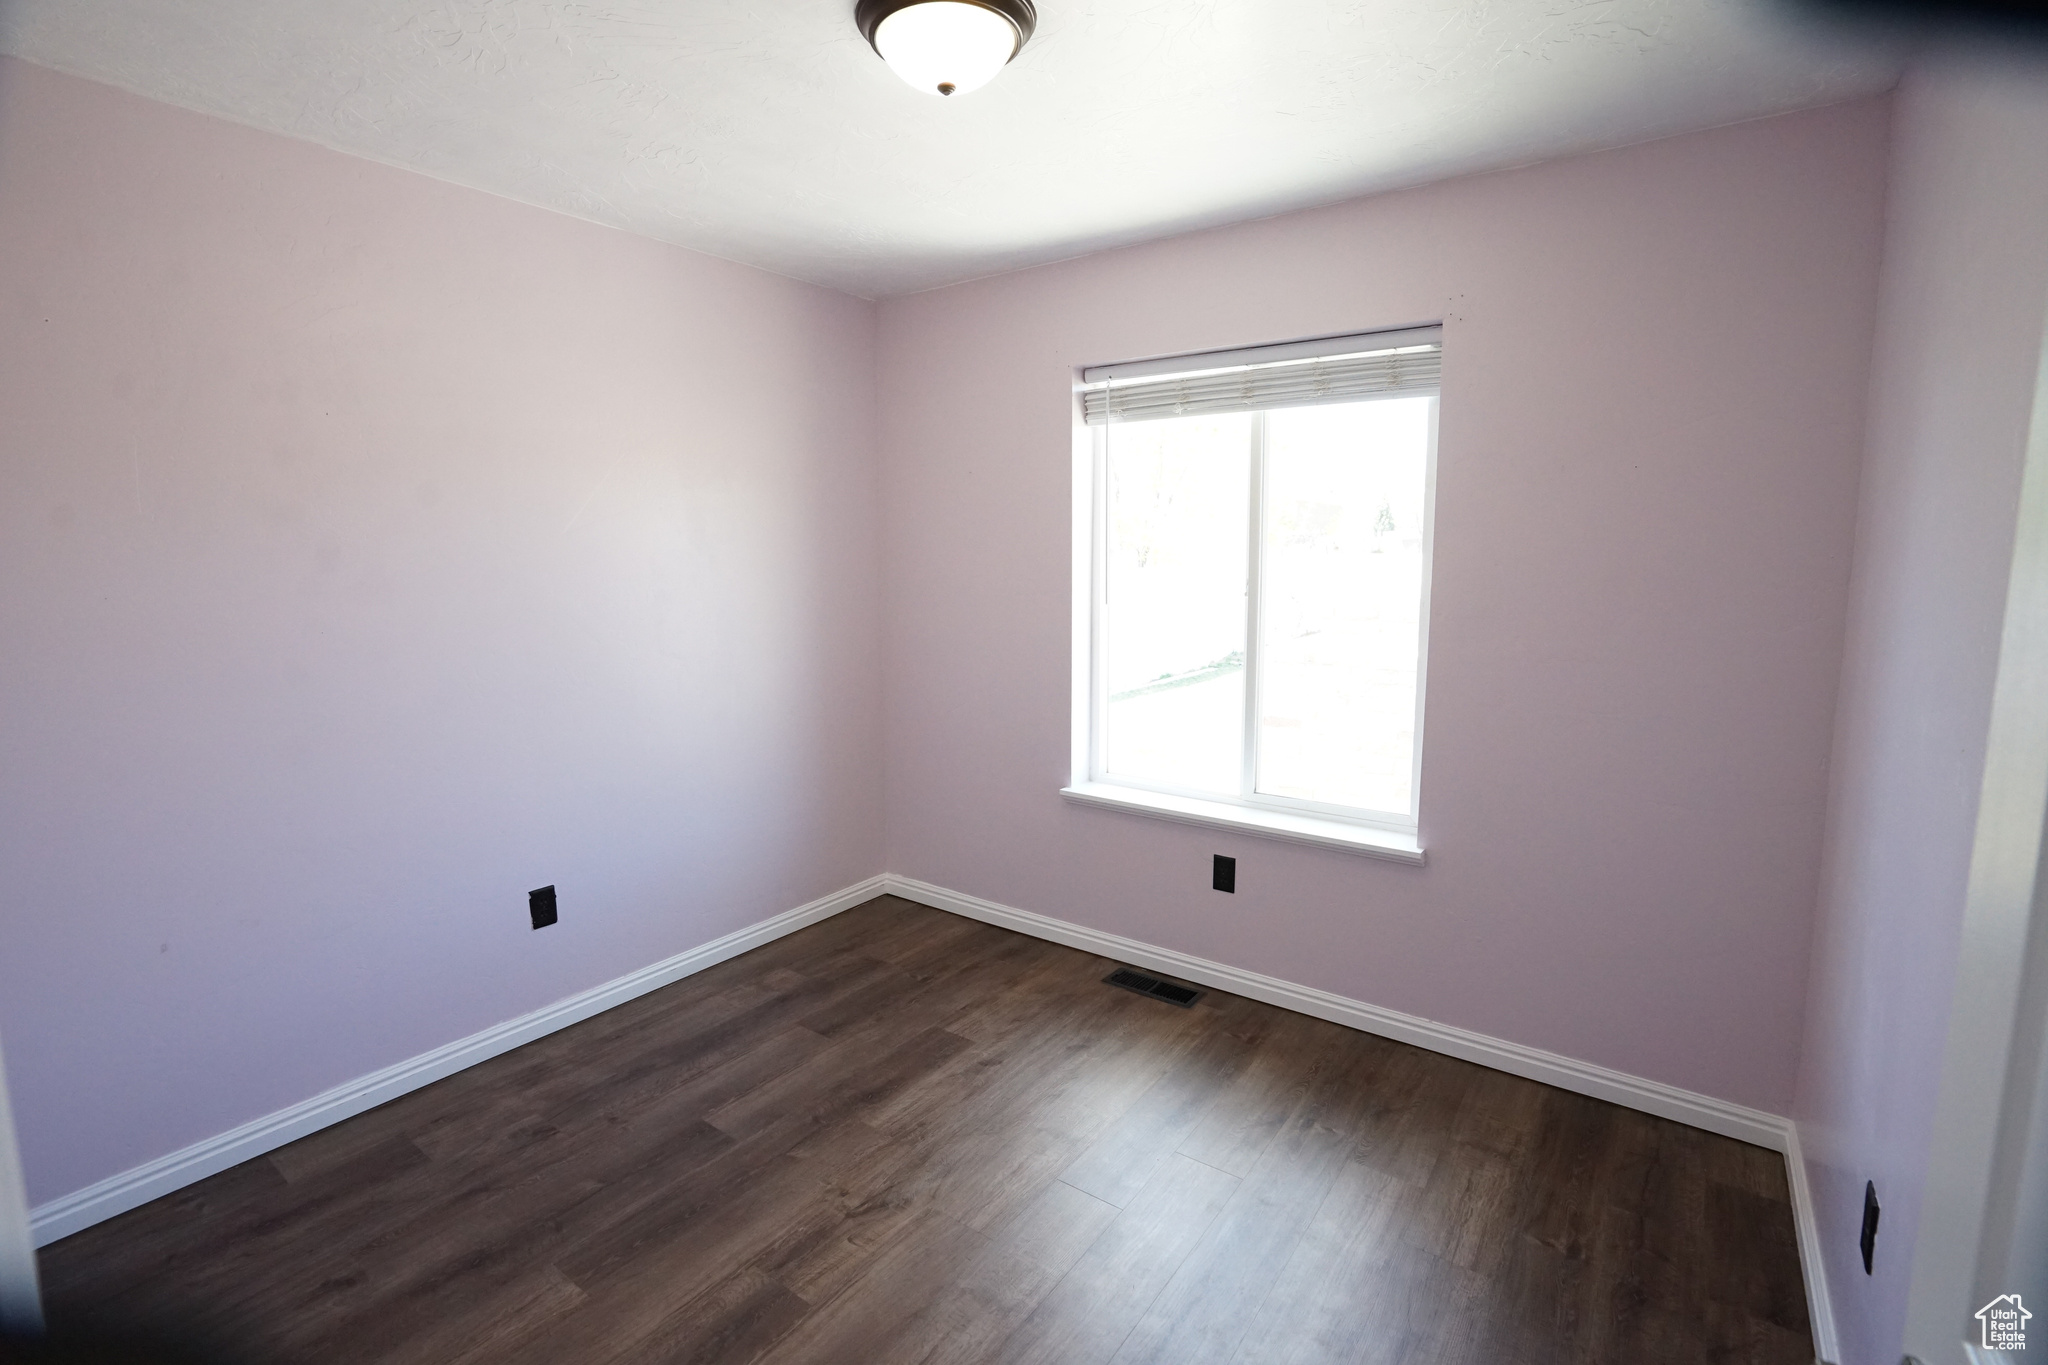 Spare room with plenty of natural light and dark hardwood / wood-style floors